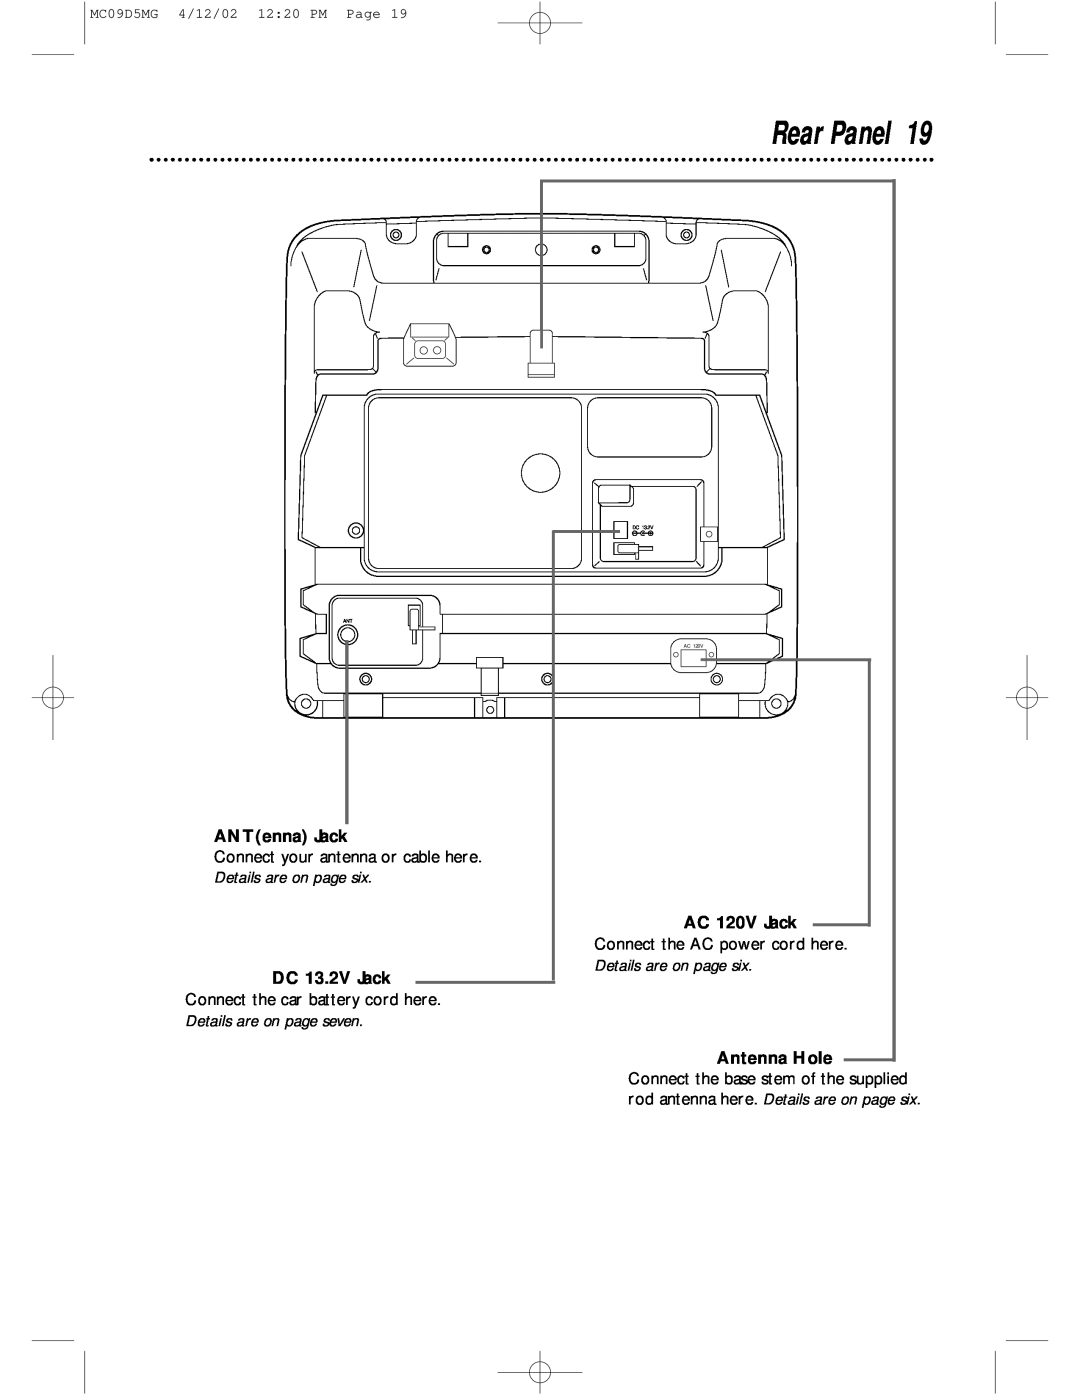 Magnavox owner manual Rear Panel, ANTenna Jack, DC 13.2V Jack, AC 120V Jack, MC09D5MG 4/12/02 1220 PM Page, Dc Ac 